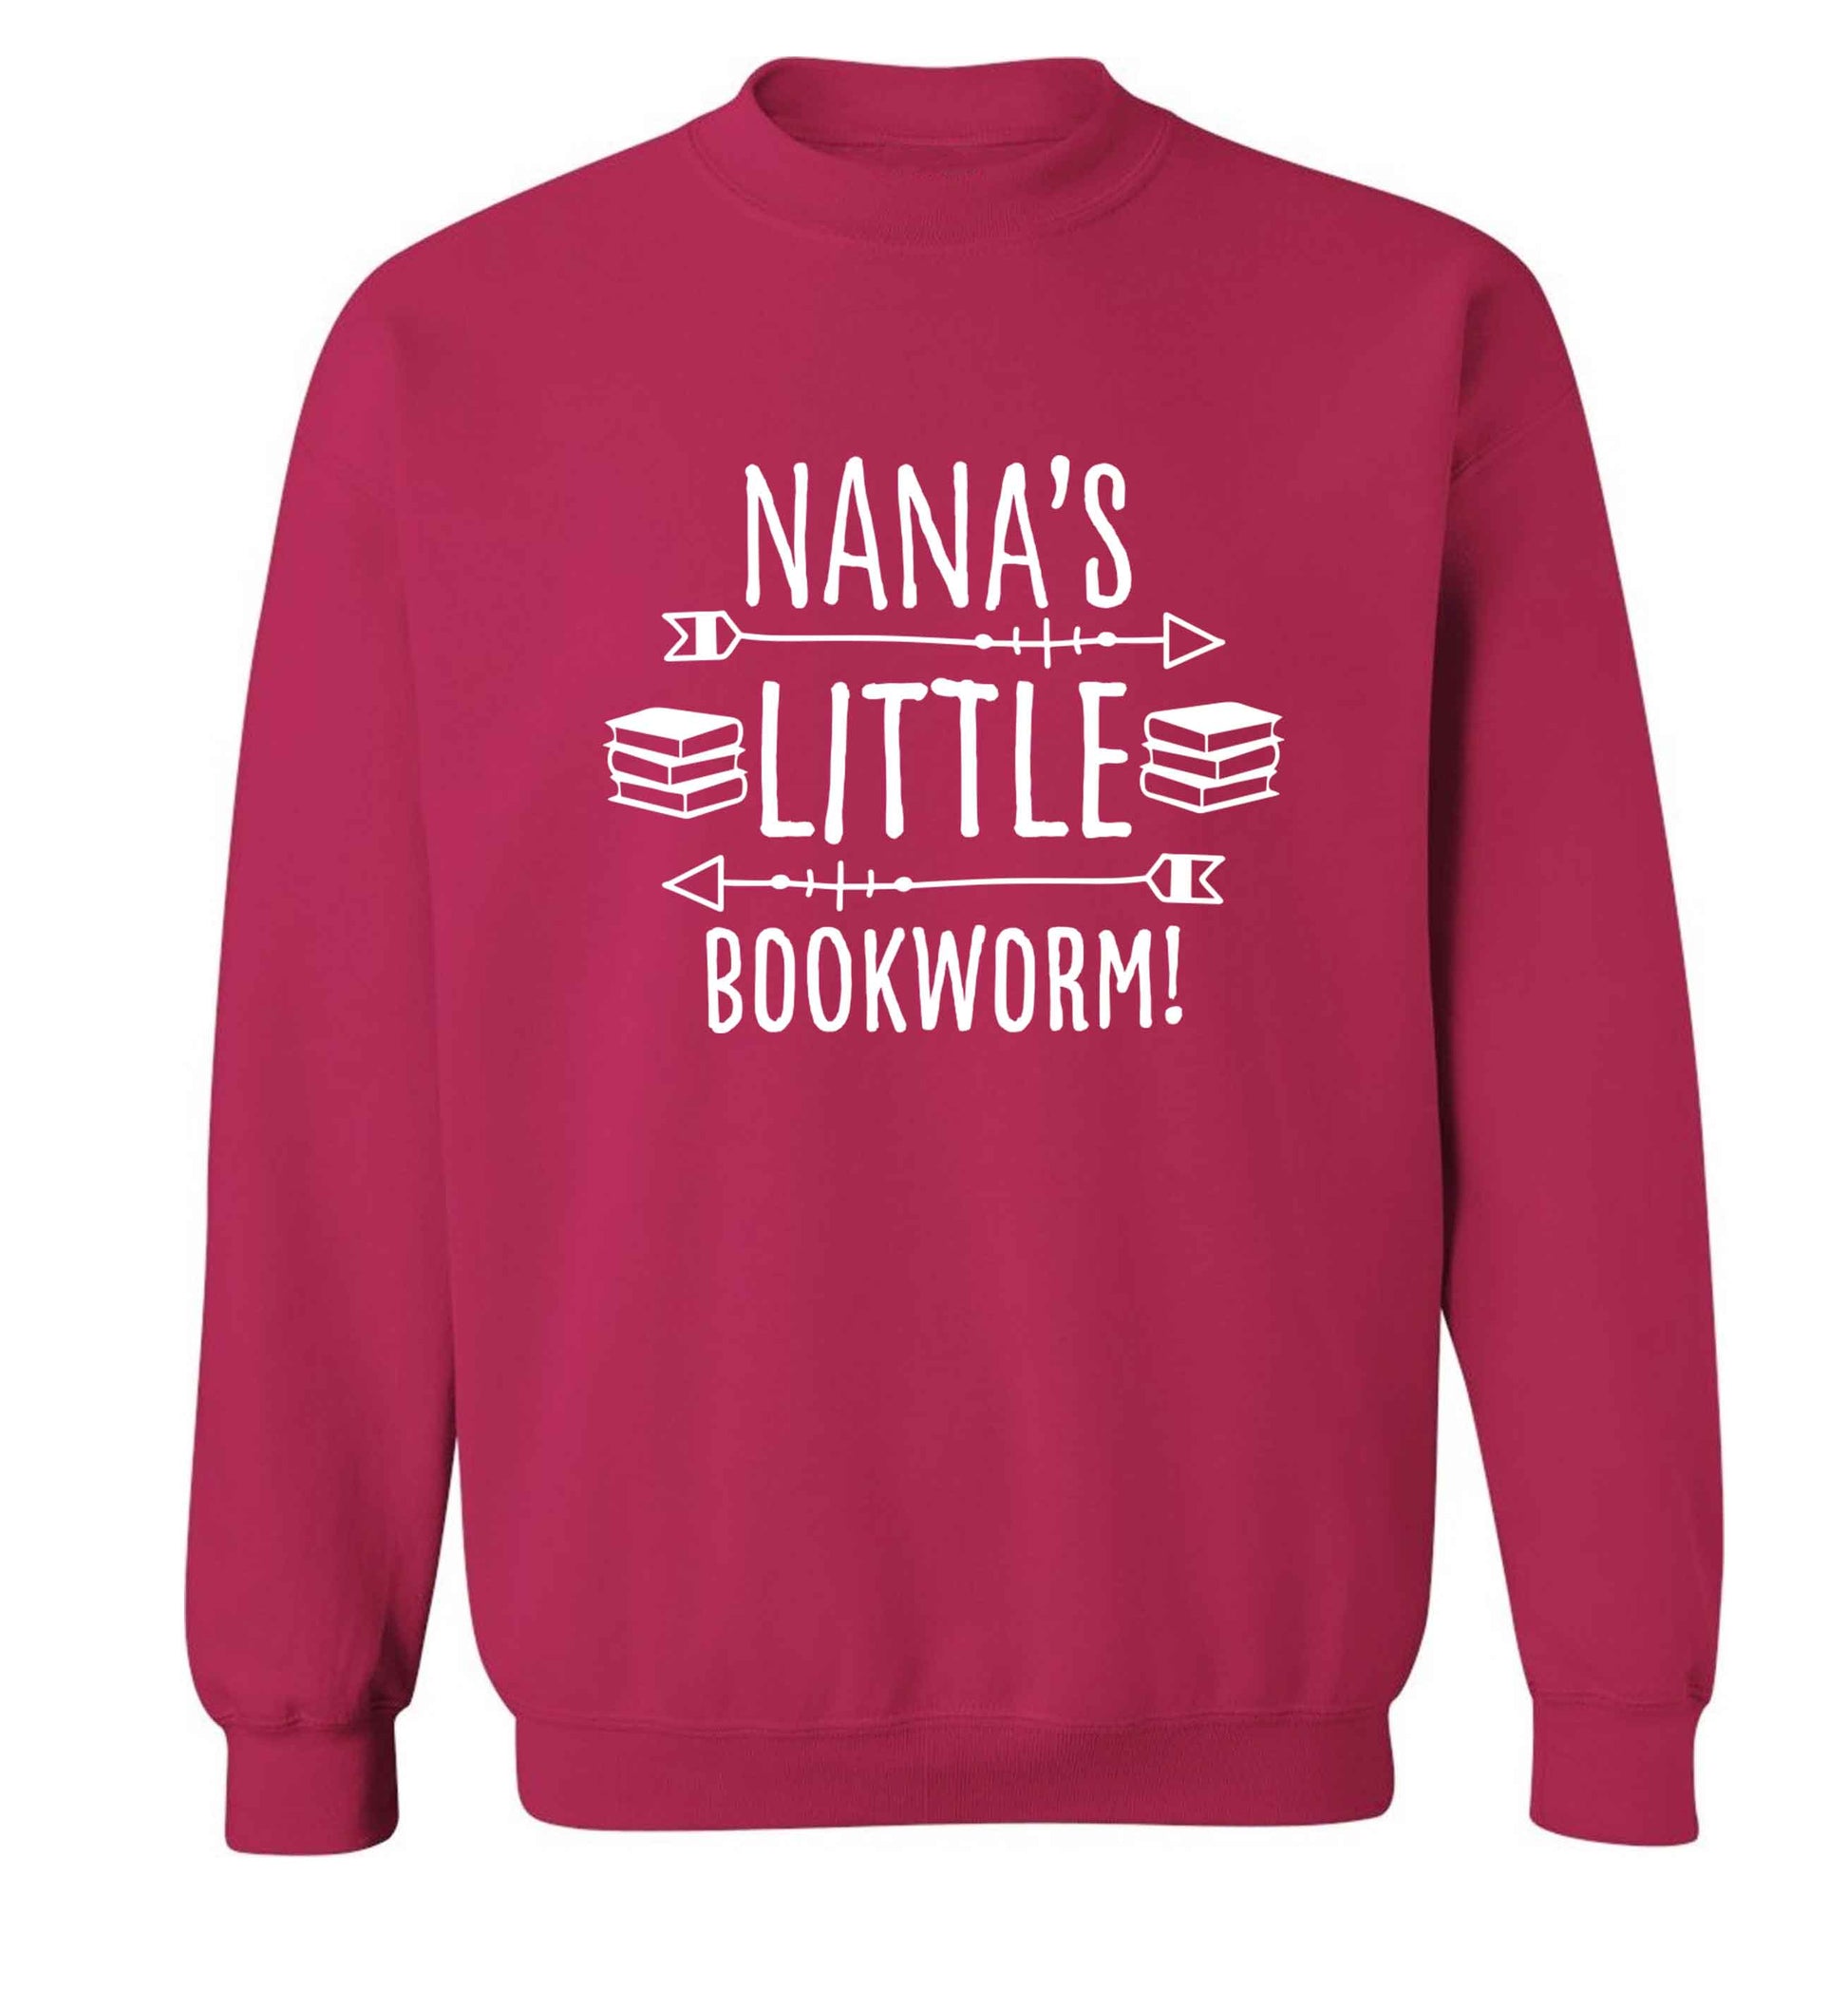 Nana's little bookworm adult's unisex pink sweater 2XL